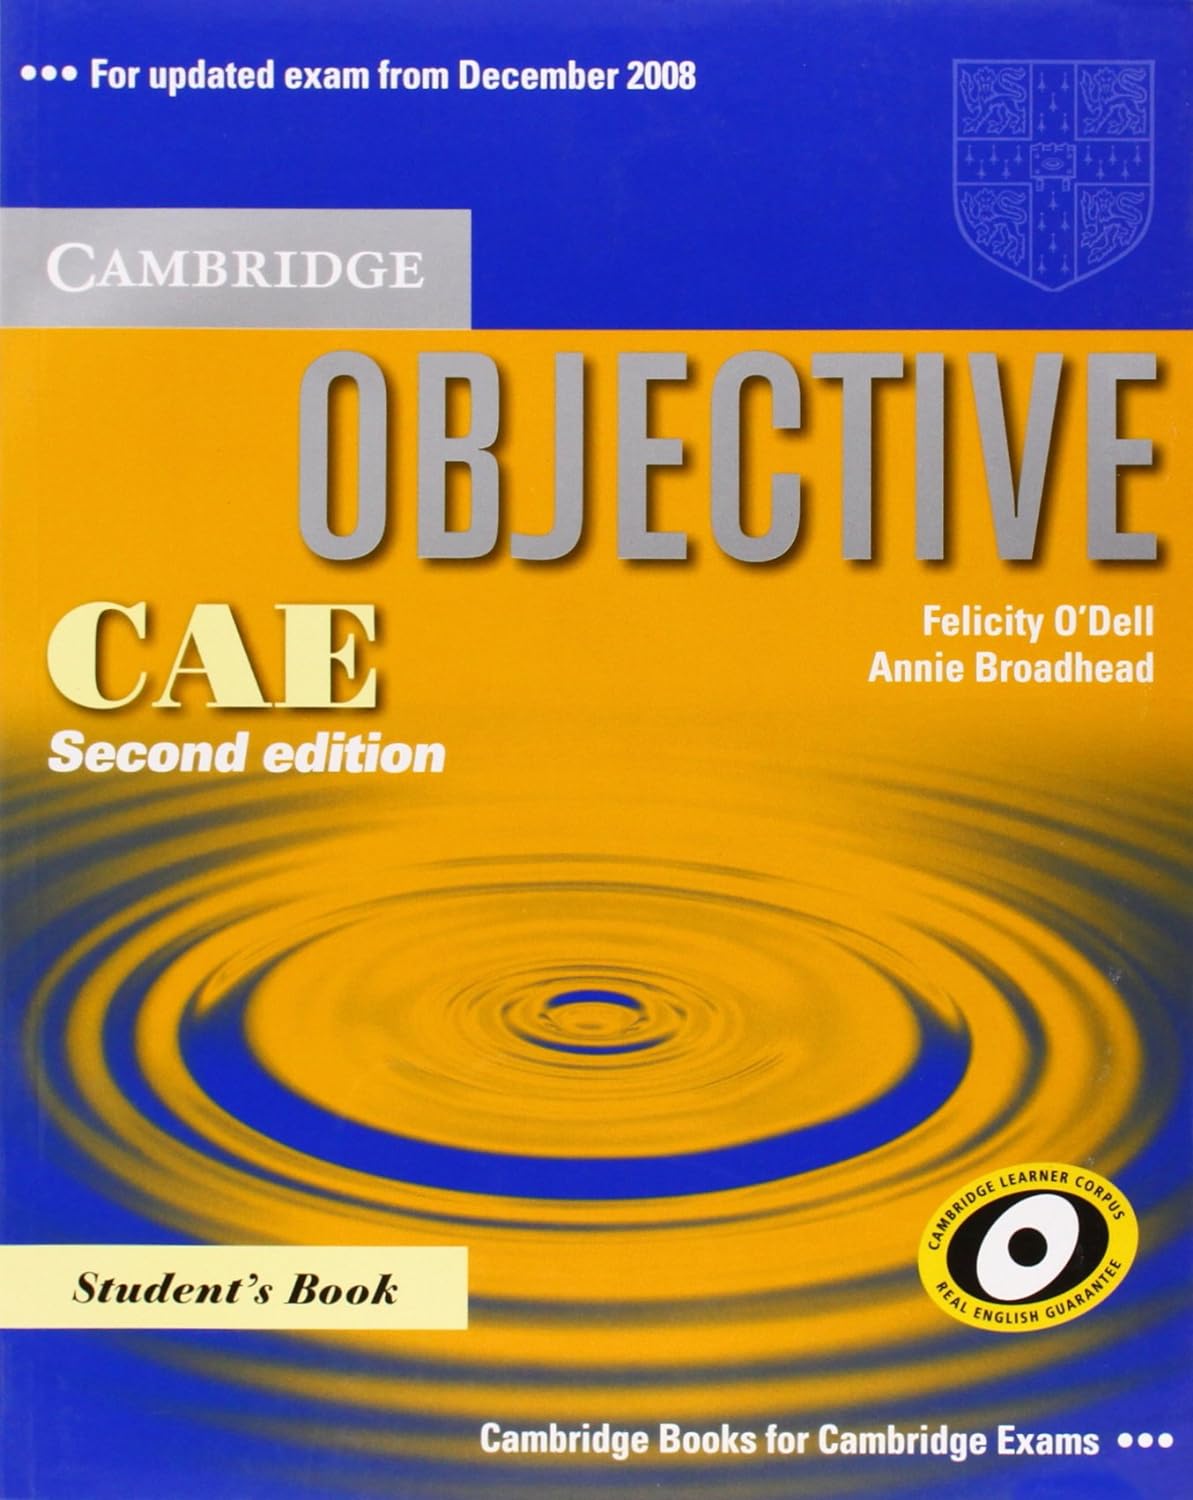 Objective CAE Student’s Book | Felicity O’Dell, Annie Broadhead (CAE)